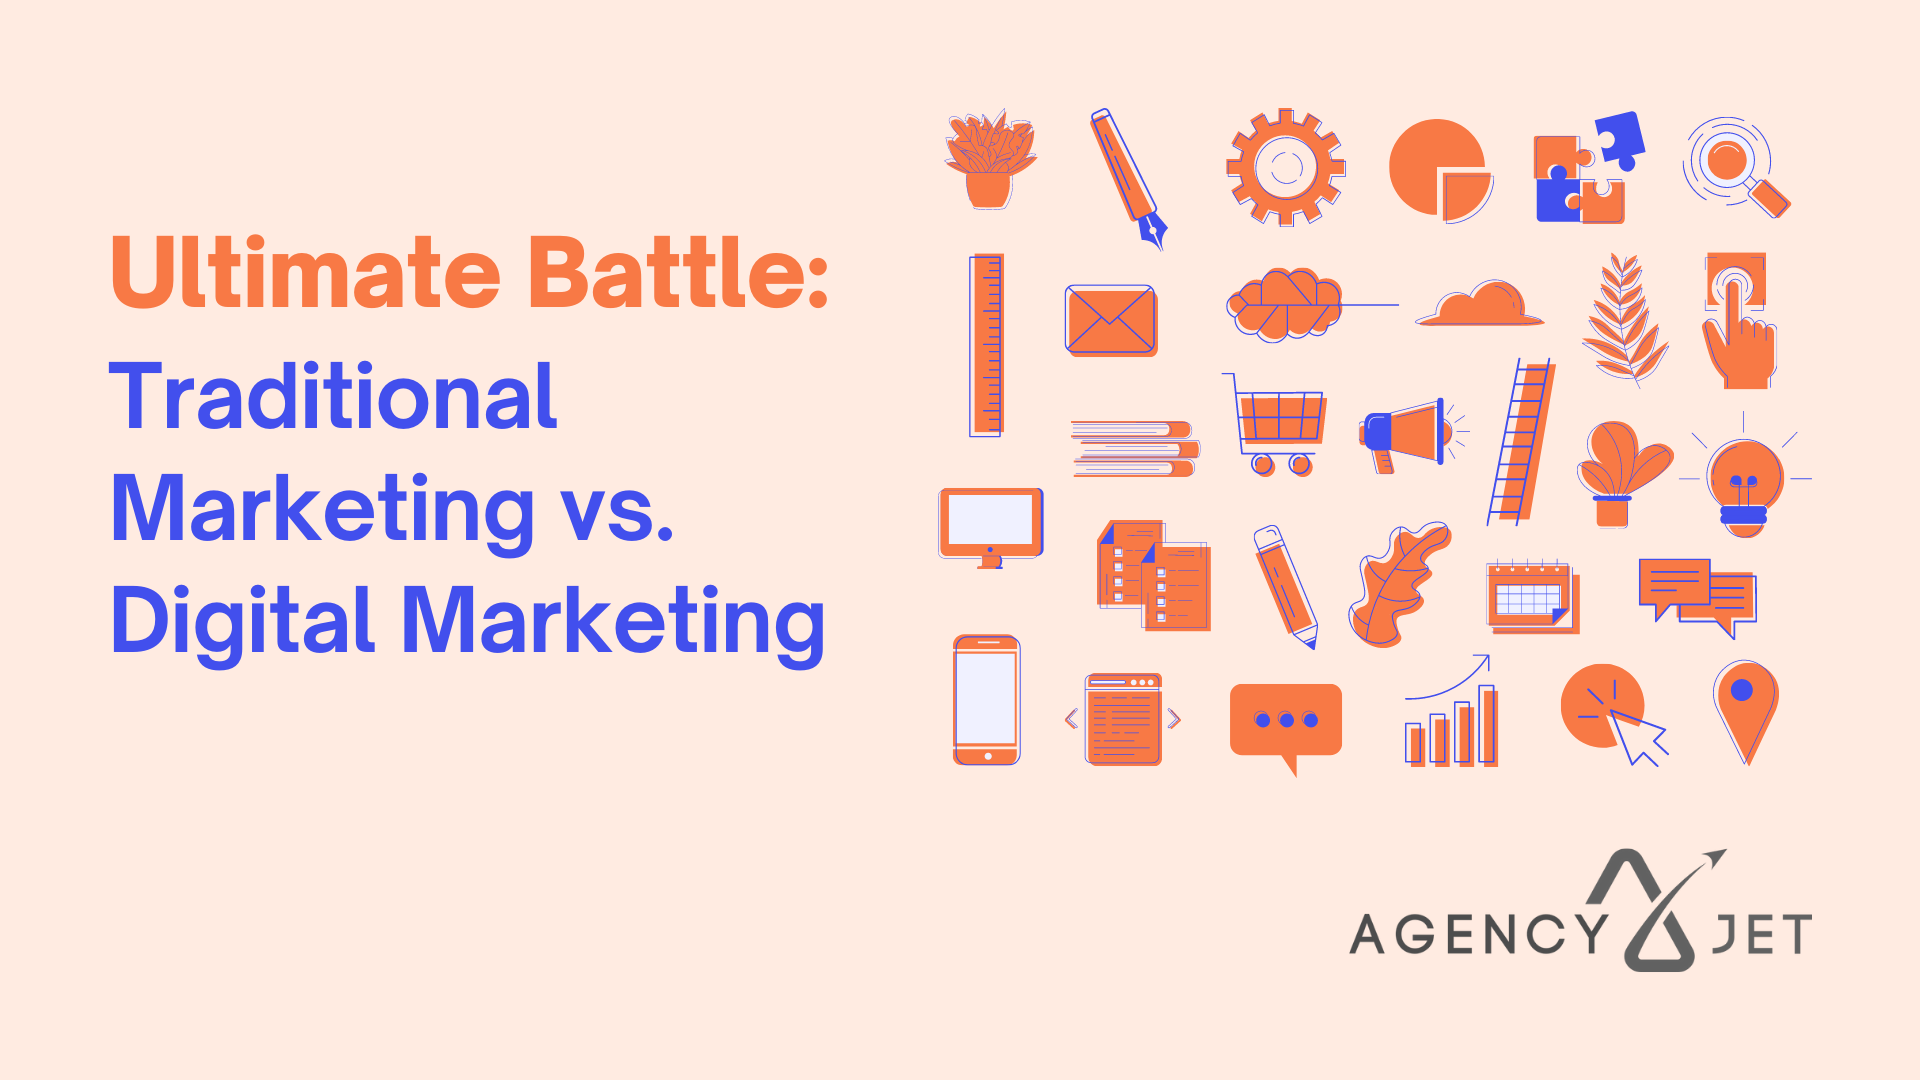 Traditional Marketing vs. Digital Marketing - Agency Jet